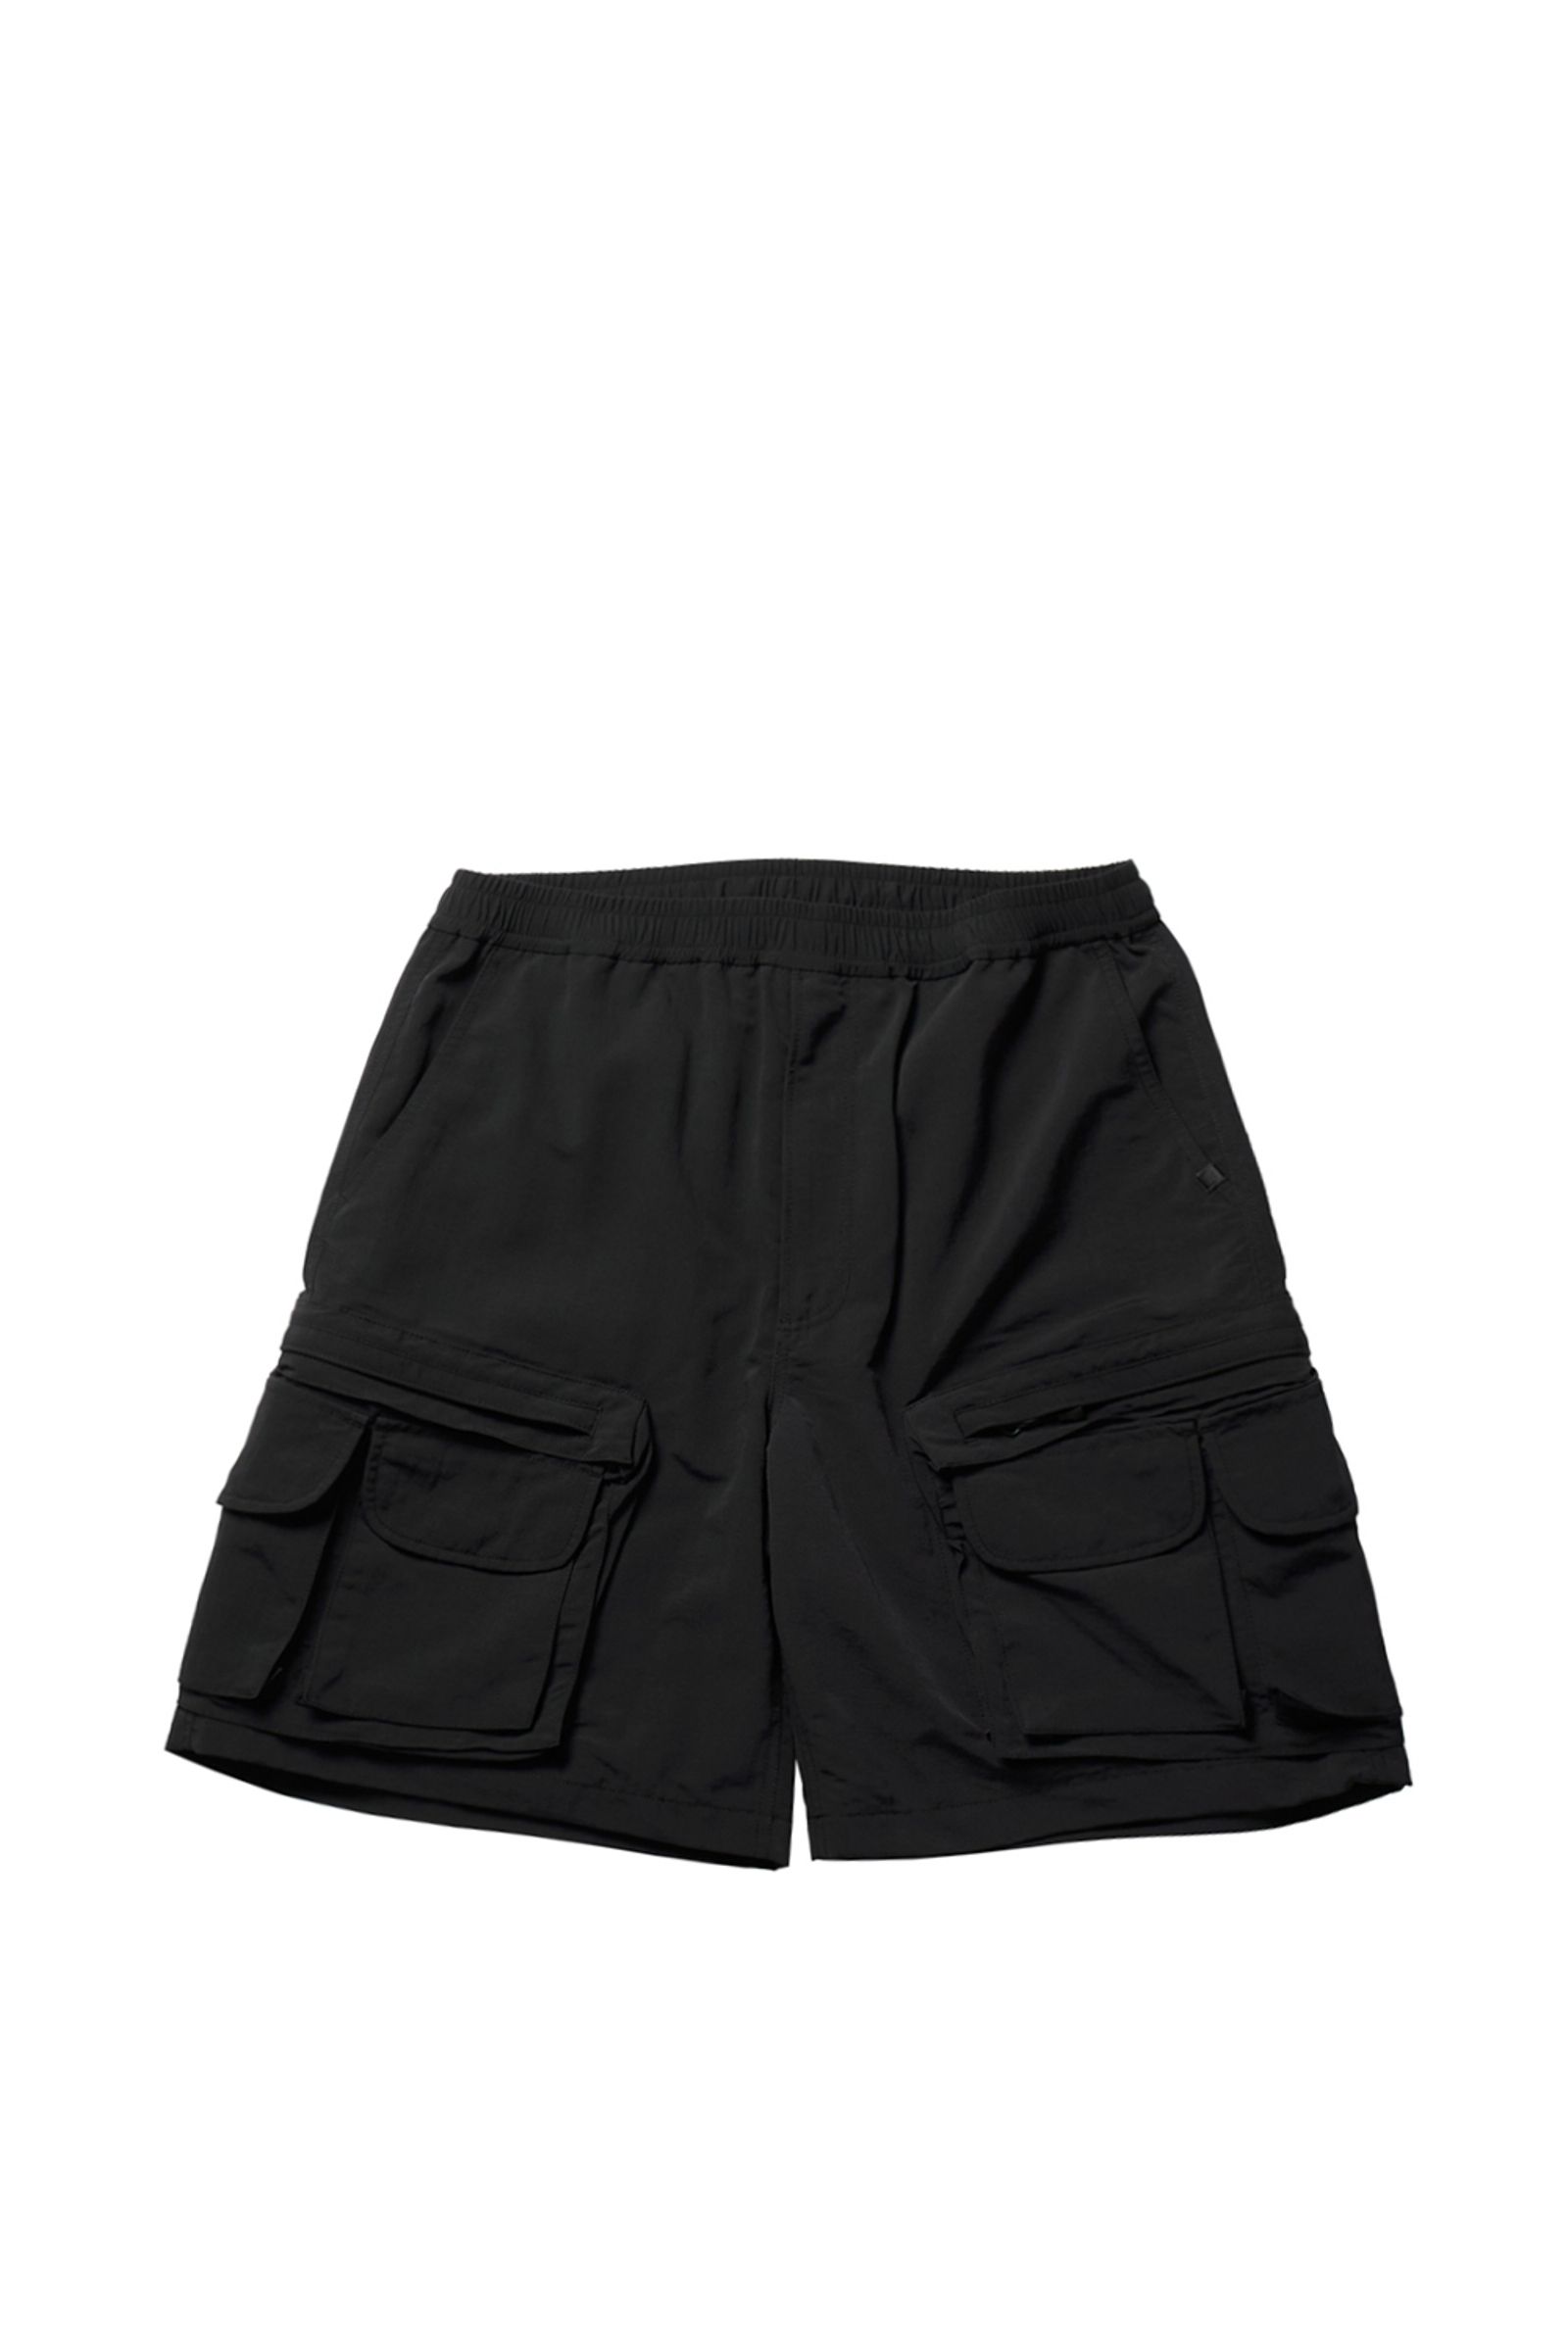 DAIWA PIER39 - tech perfect fishing shorts-black-23ss men | asterisk